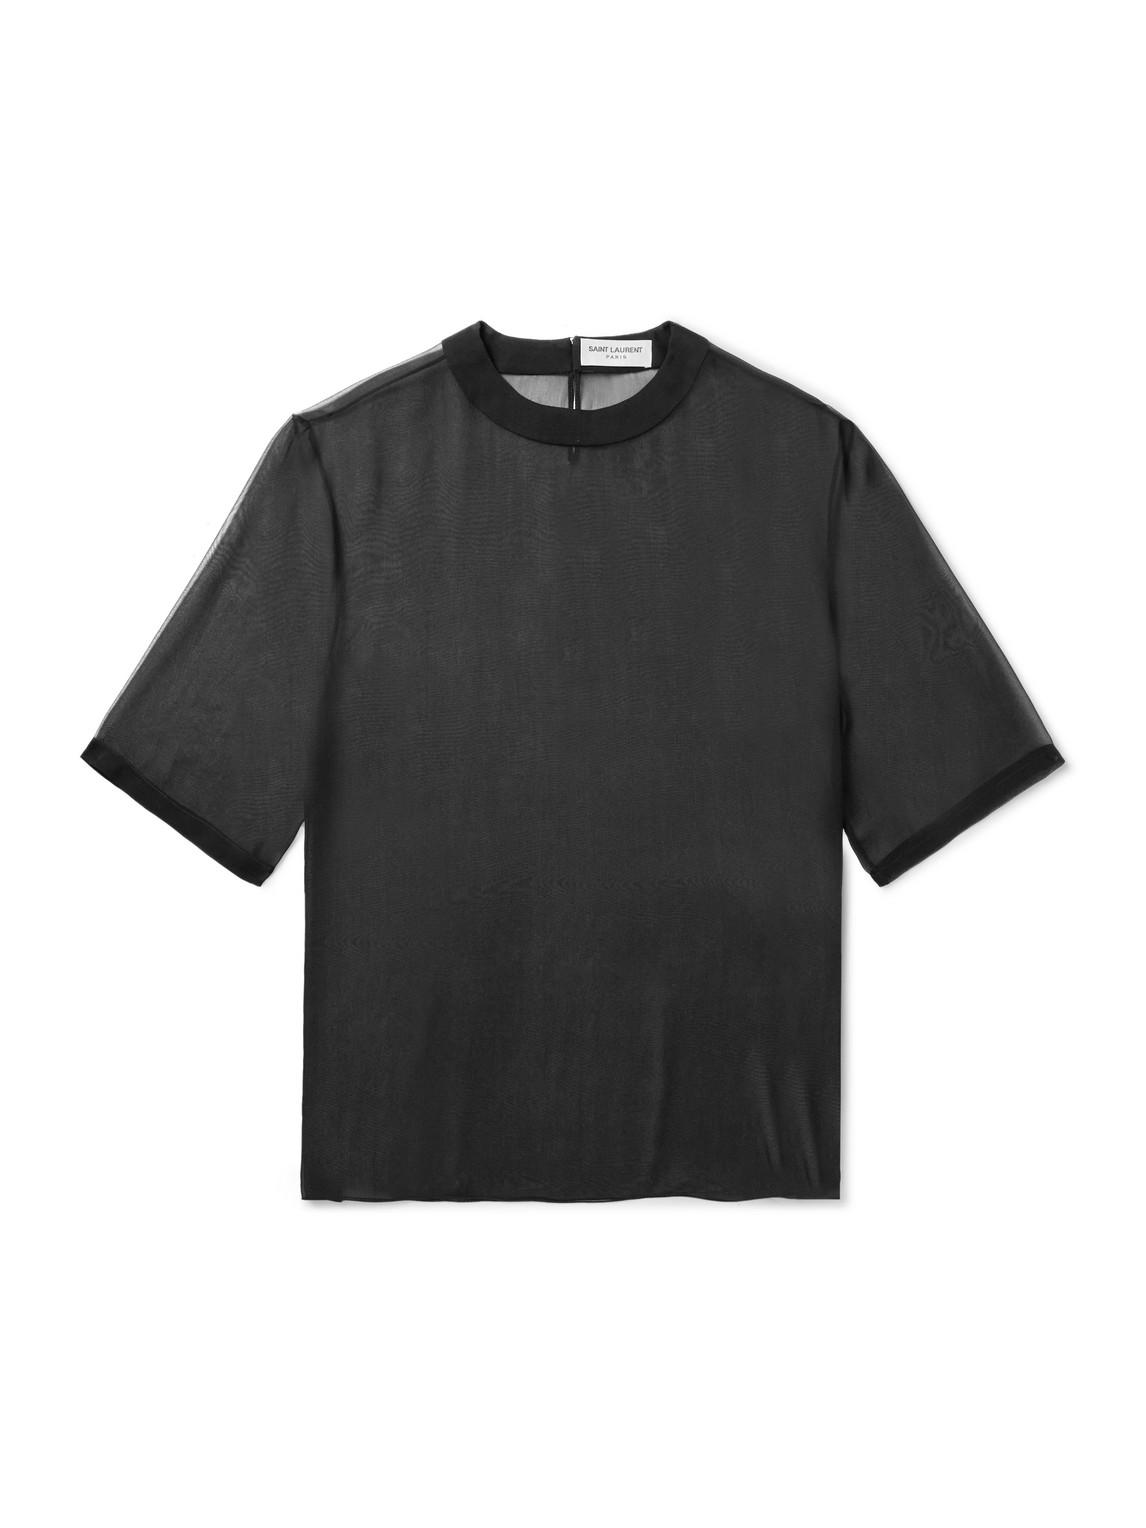 SAINT LAURENT - Silk-Organza T-Shirt - Men - Black - L von SAINT LAURENT